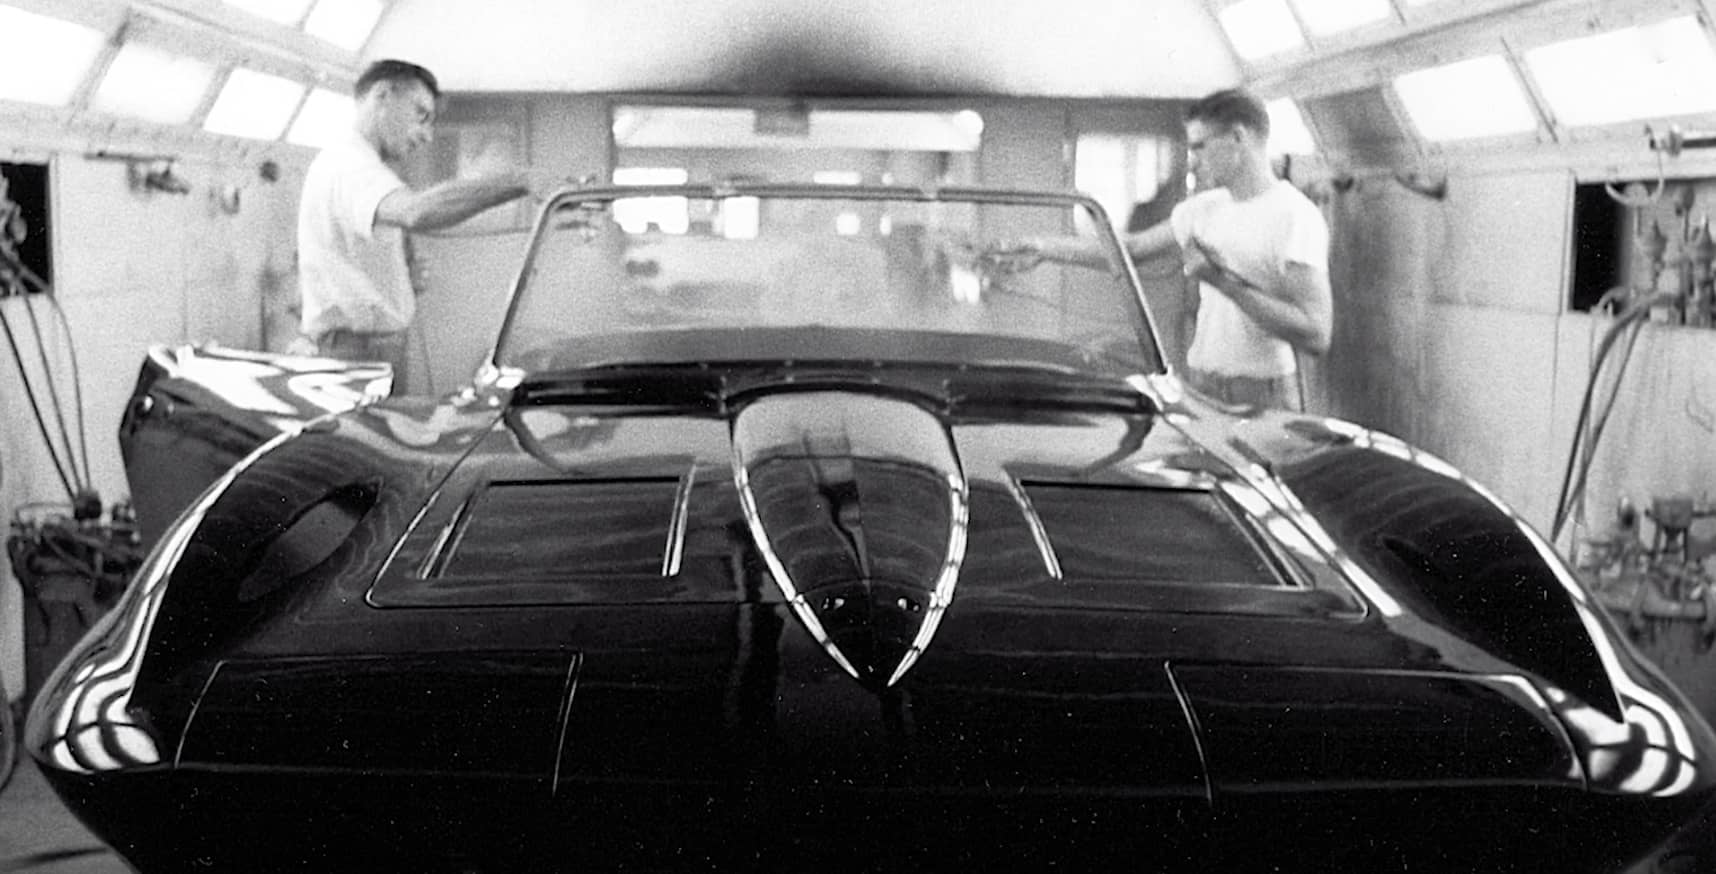 Vicari Corvettes, Sequential series: Pete Vicari putting his trio of pre-production ’63 Corvettes up for sale, ClassicCars.com Journal